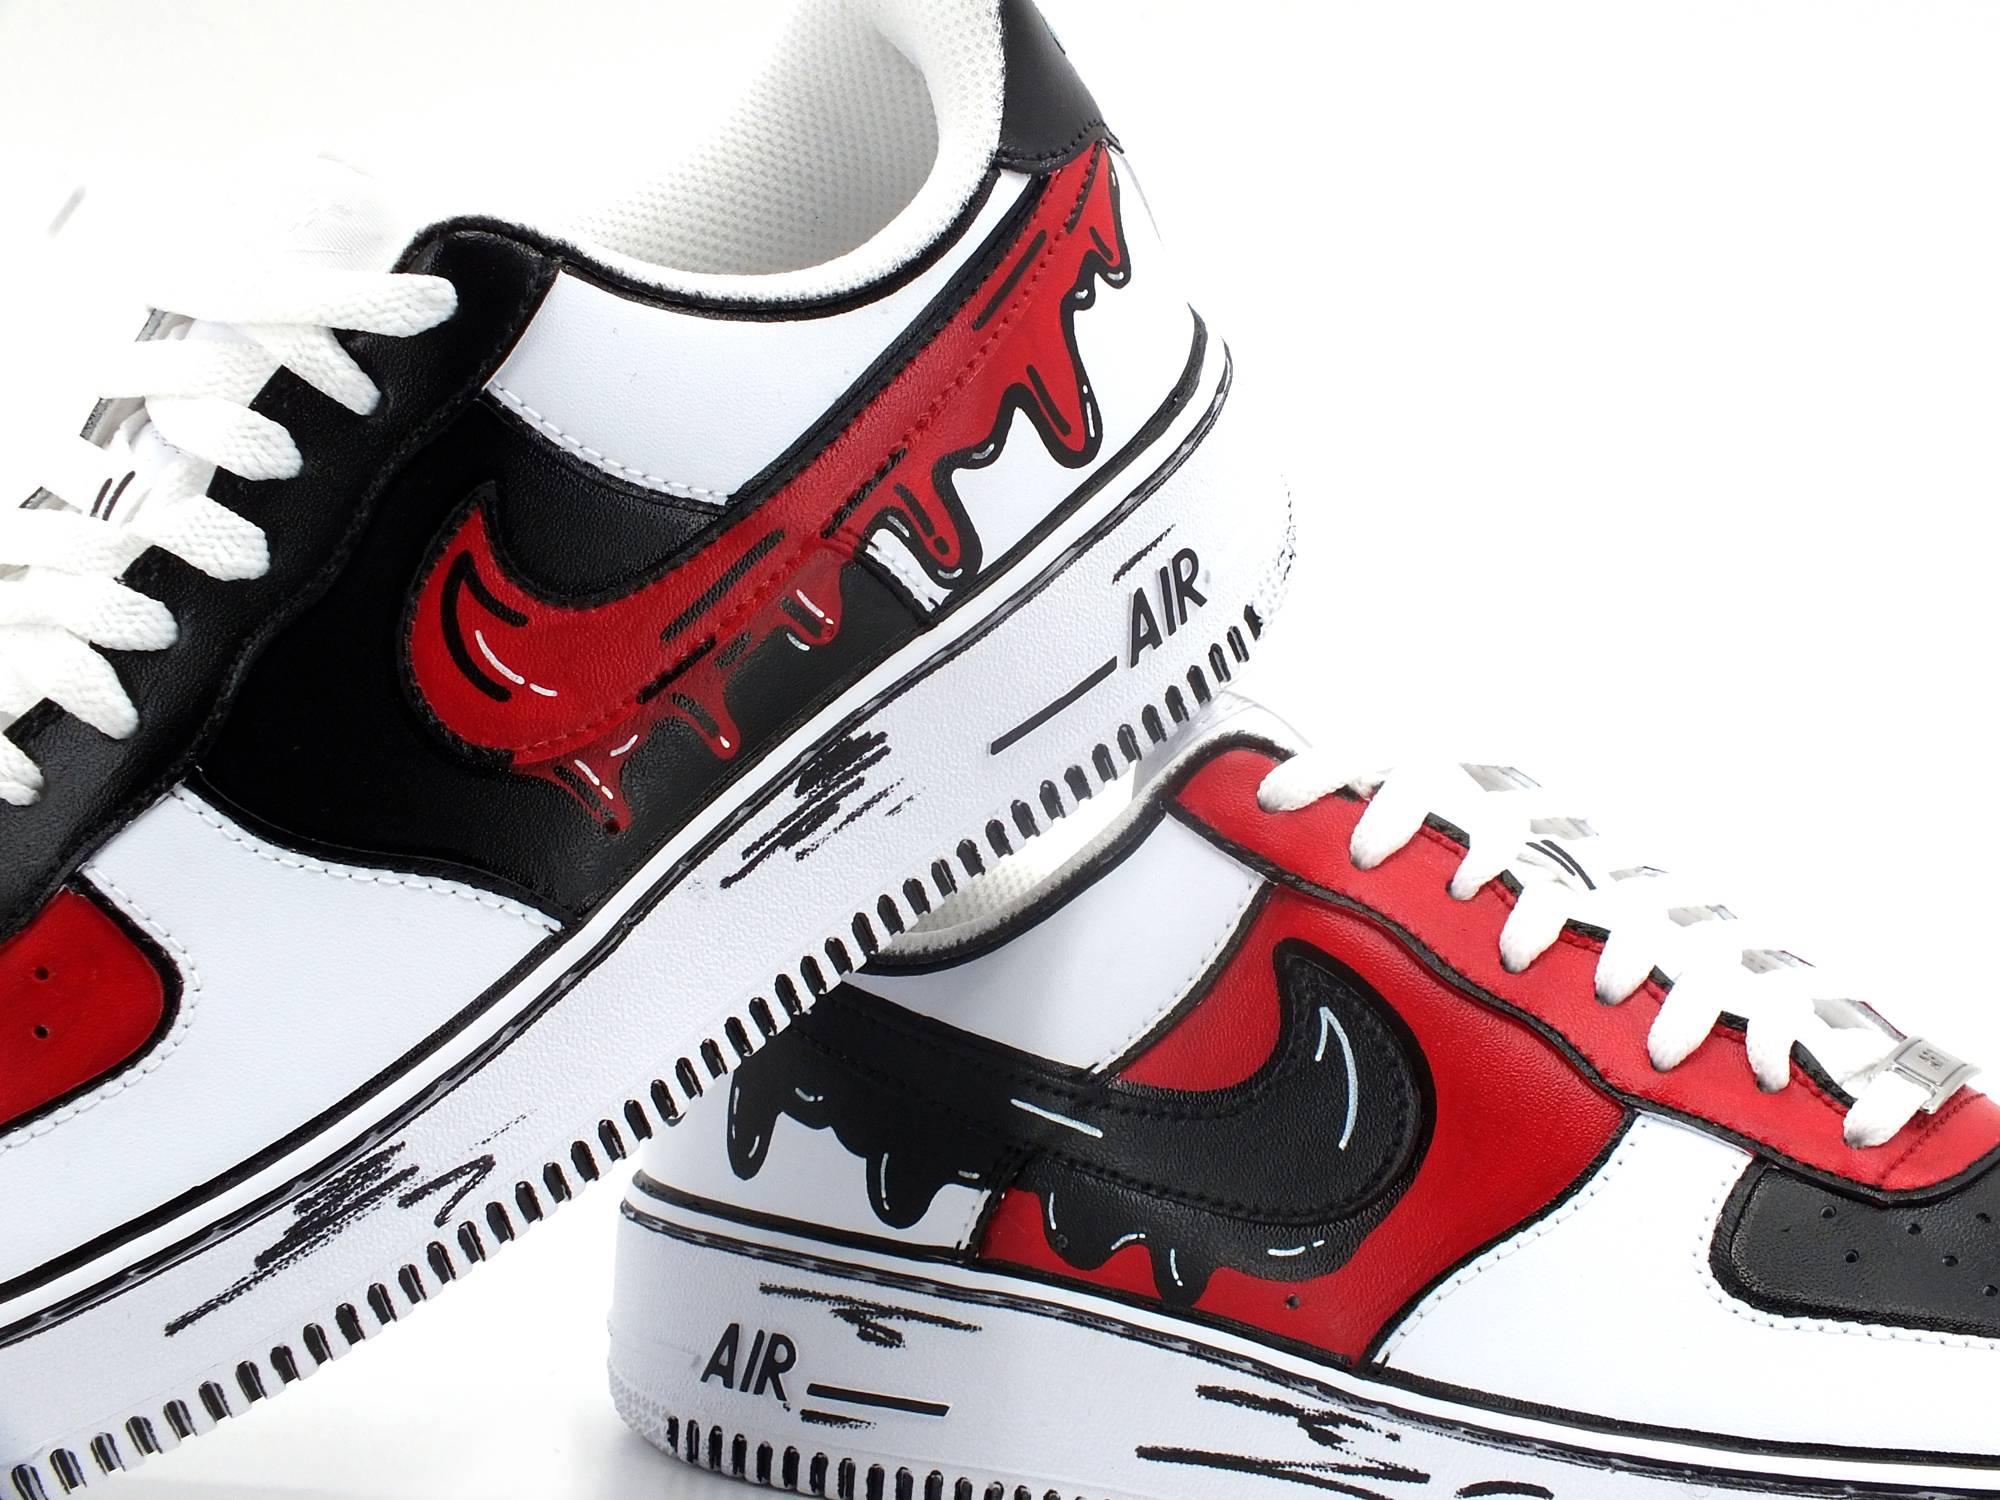 CUSTOM / Nike Air Force 1 Sneaker AF1 Comics Chicago Red White Black - Sandrini Calzature e Abbigliamento